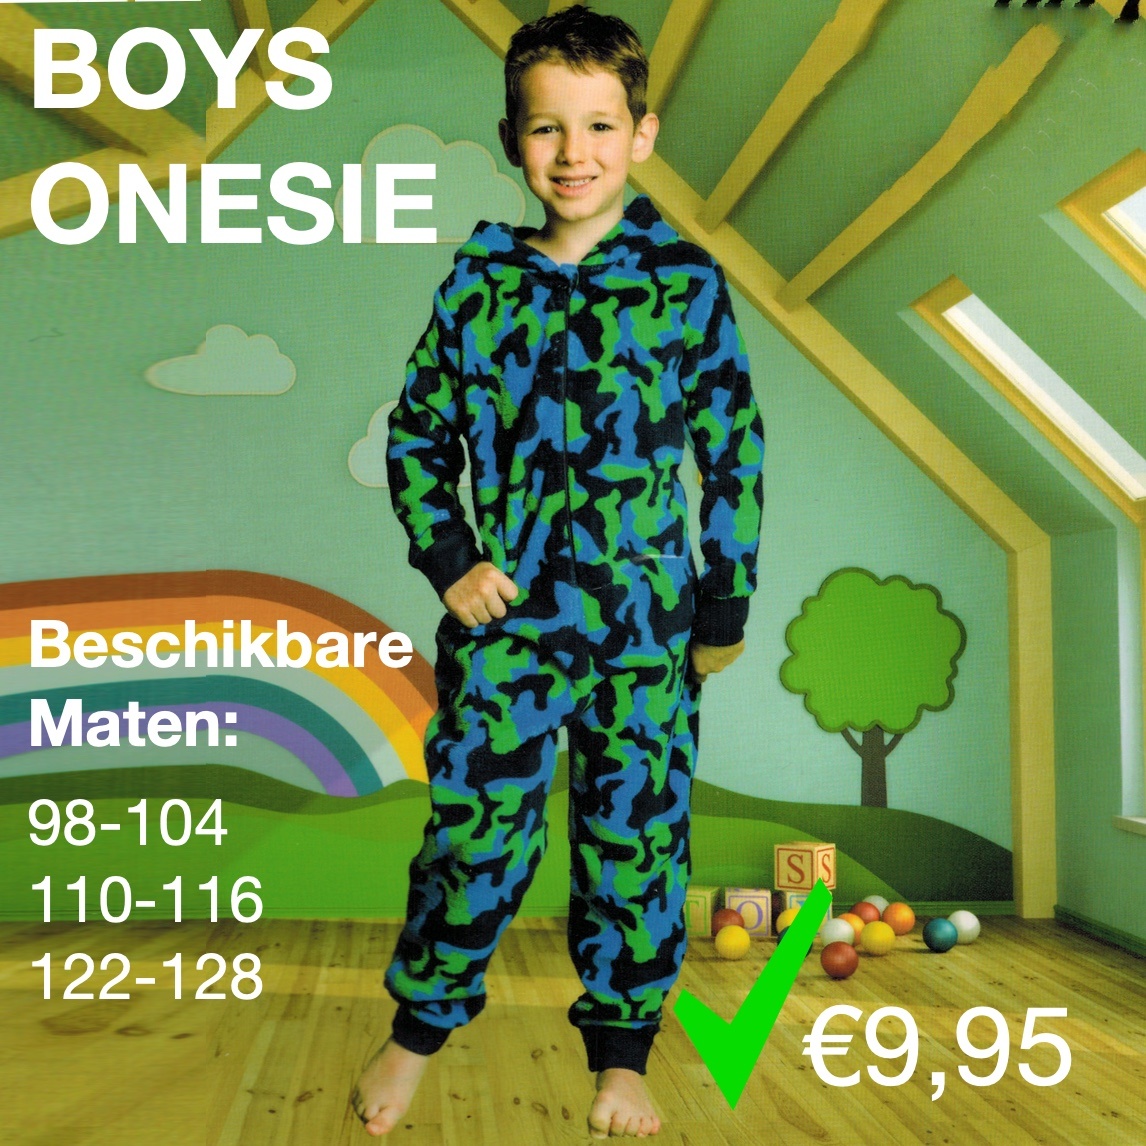 Slip schoenen gewicht accumuleren Boys onesie (98 t/m 128) - Tientjeofminder.nl